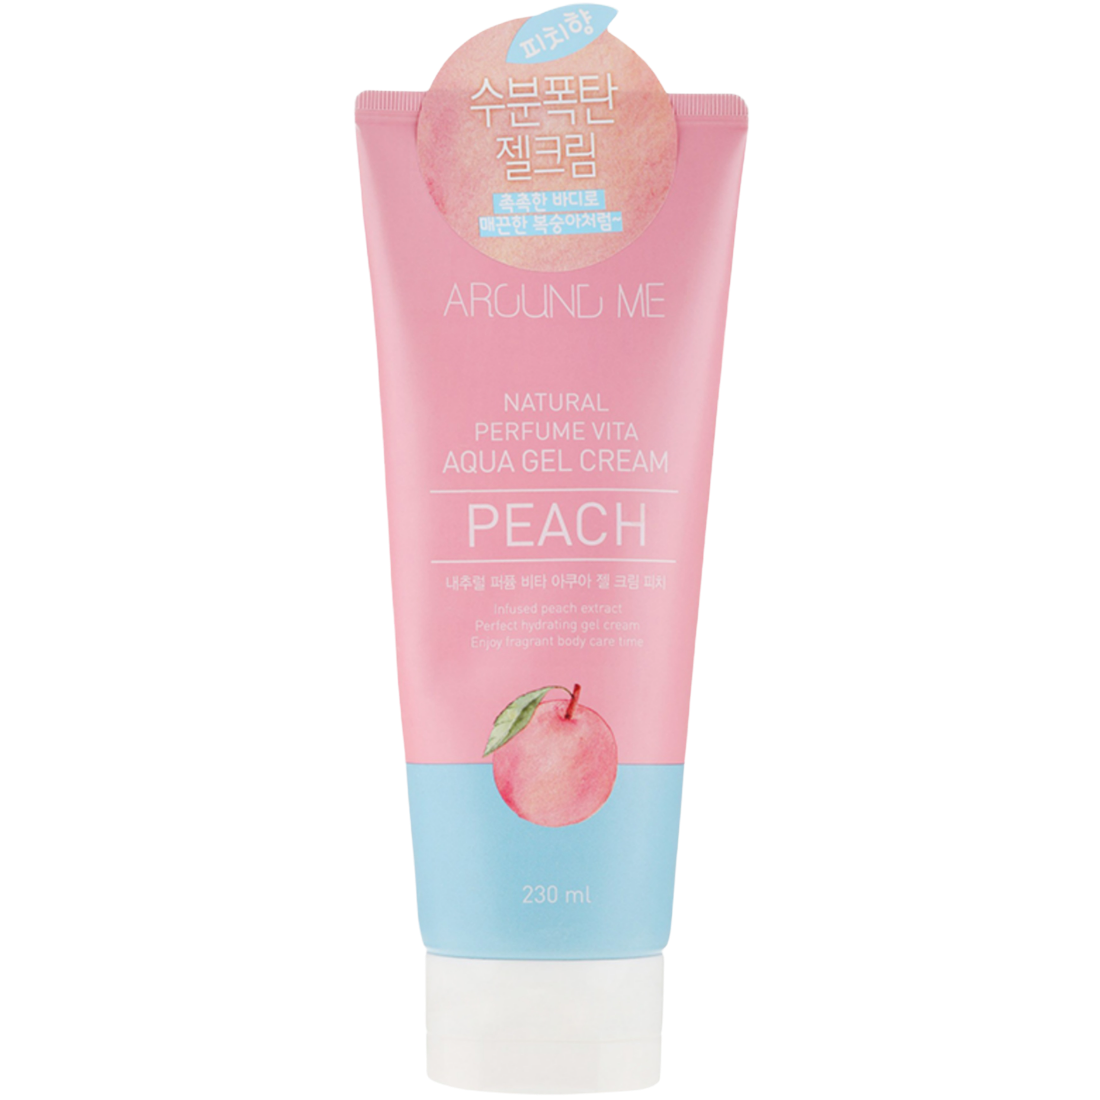 AROUND ME Natural Perfume Vita Aqua Gel Cream Peach Крем-гель для тела с персиком, 230мл